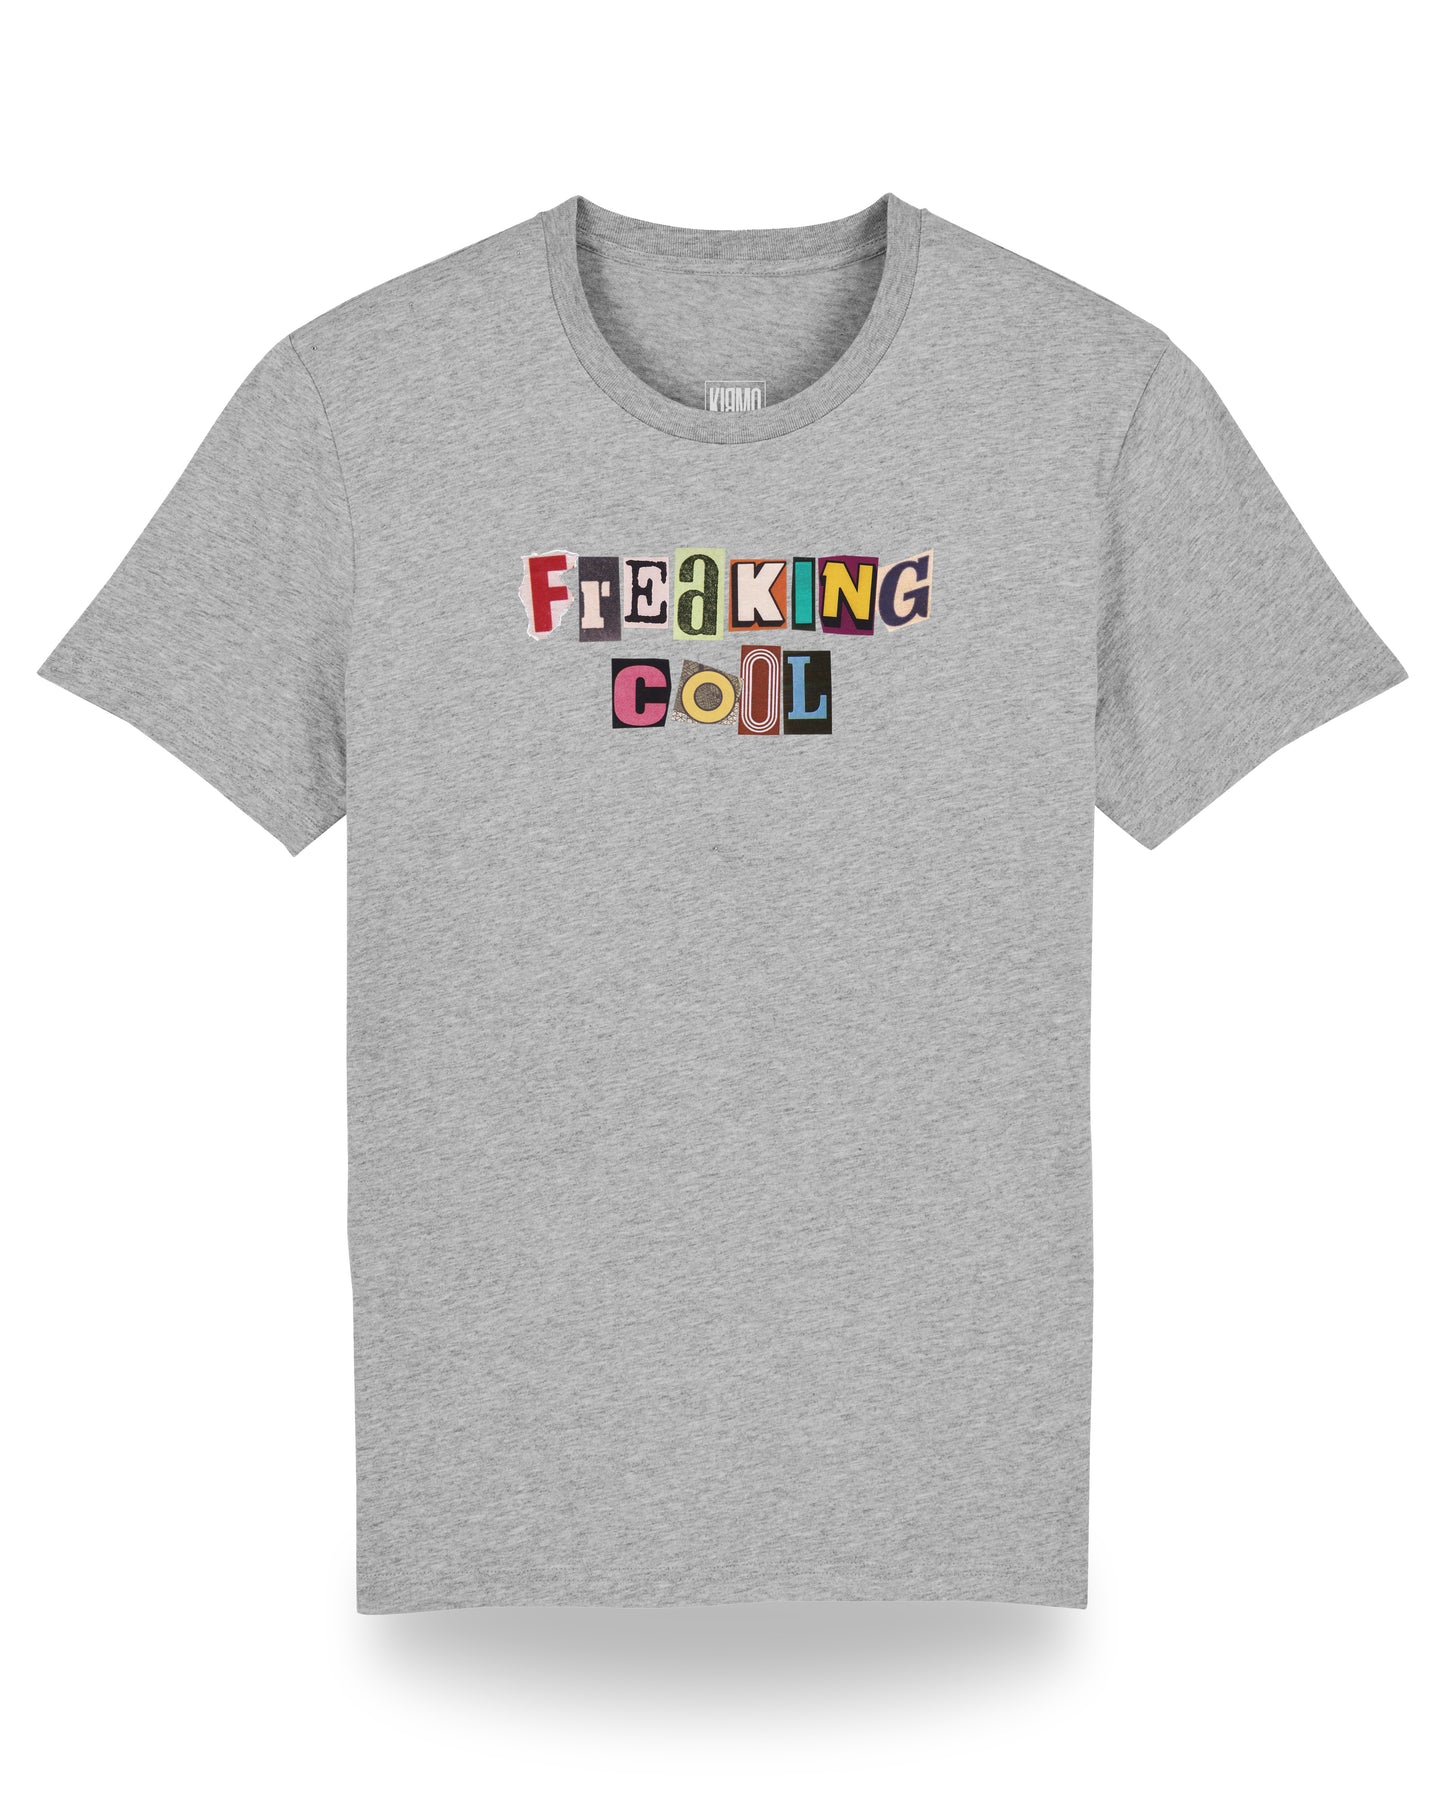 Ransom T-Shirt - Freaking Cool